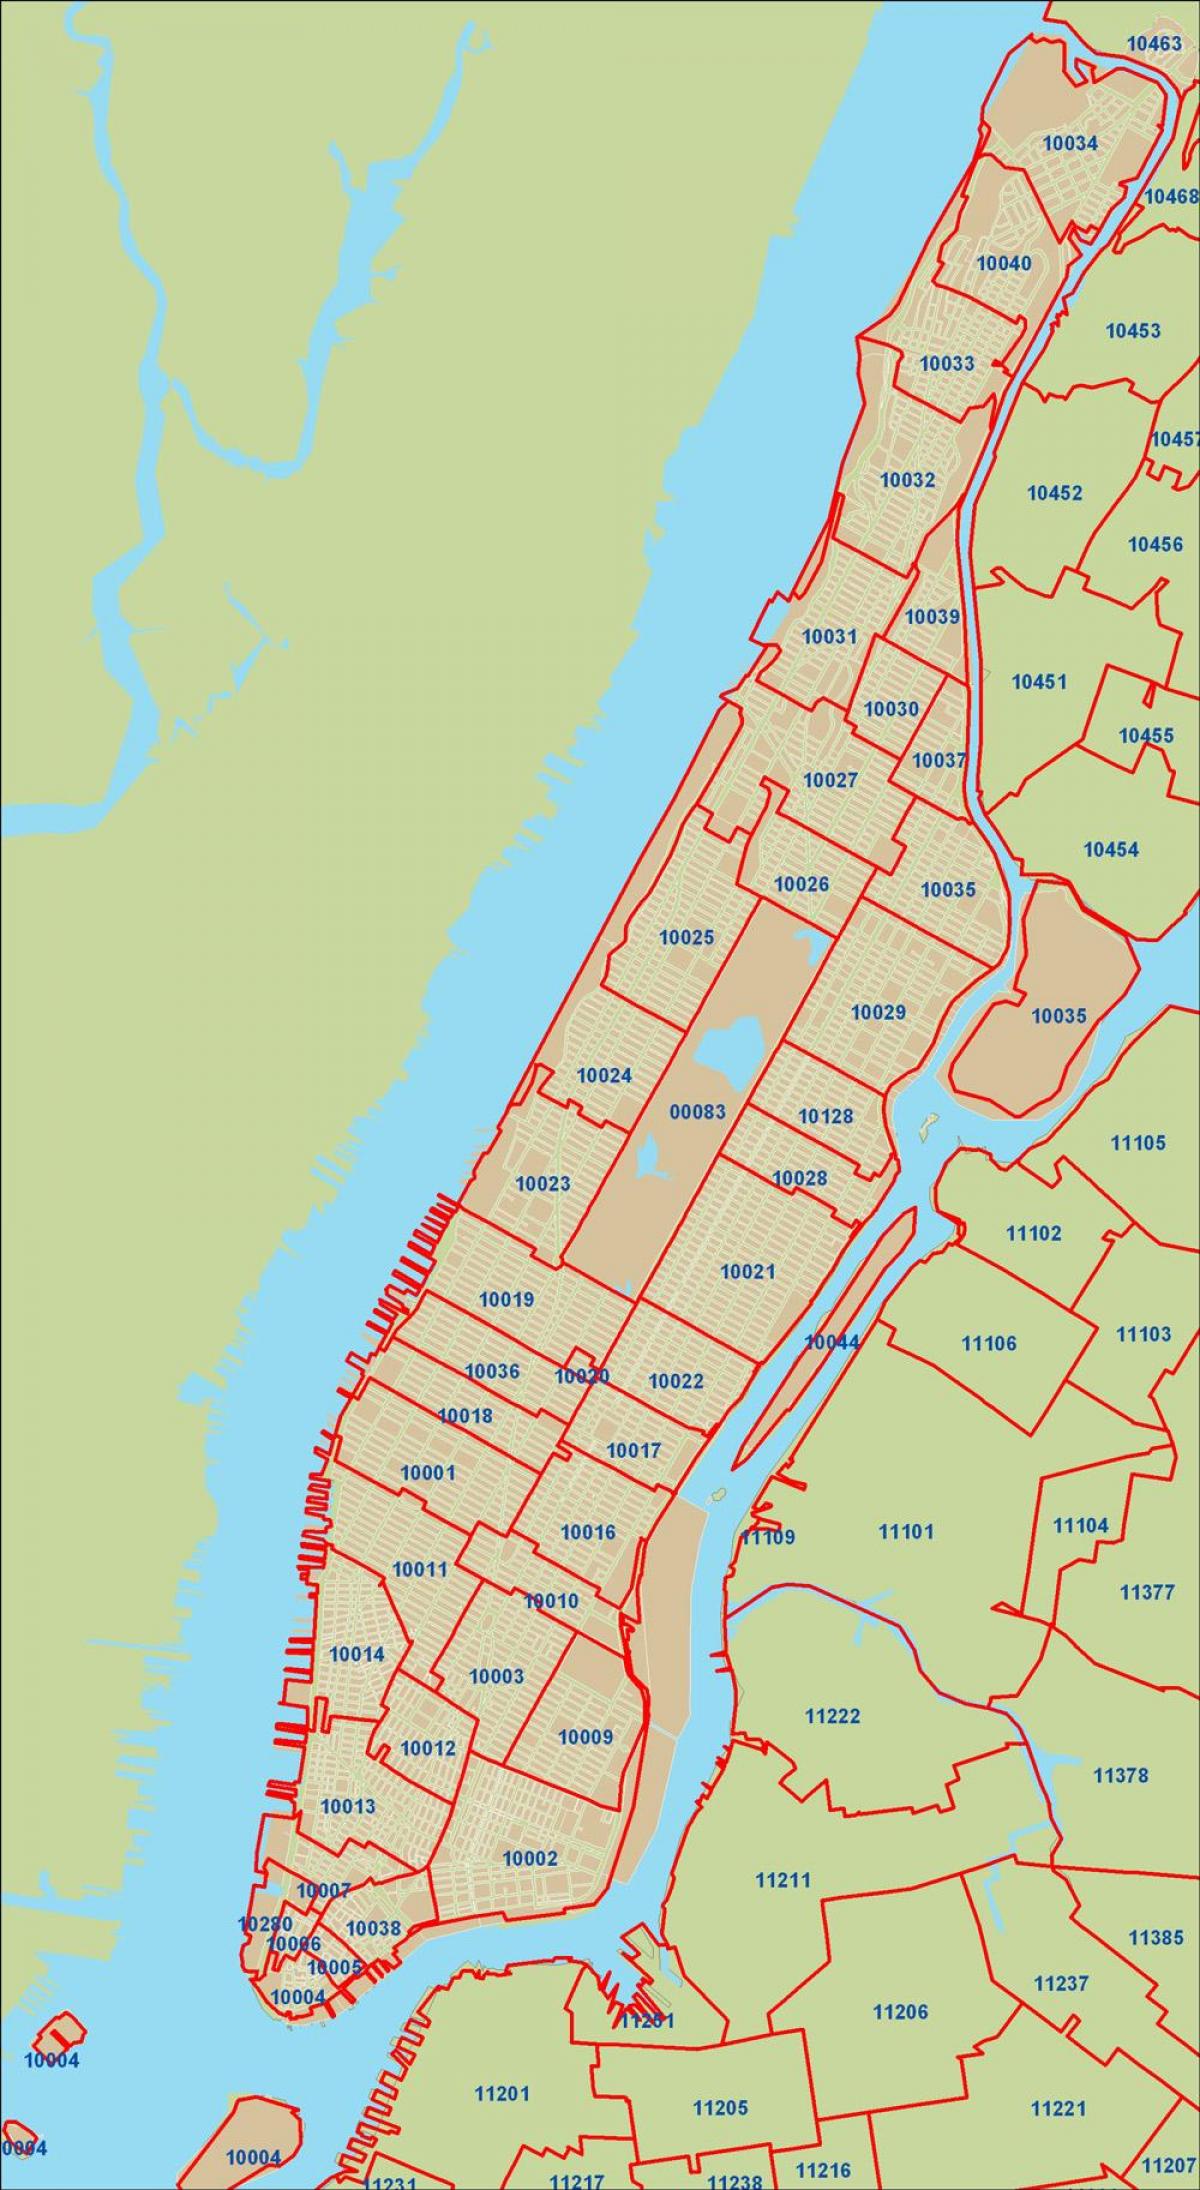 NYC postnummer Manhattan kartan